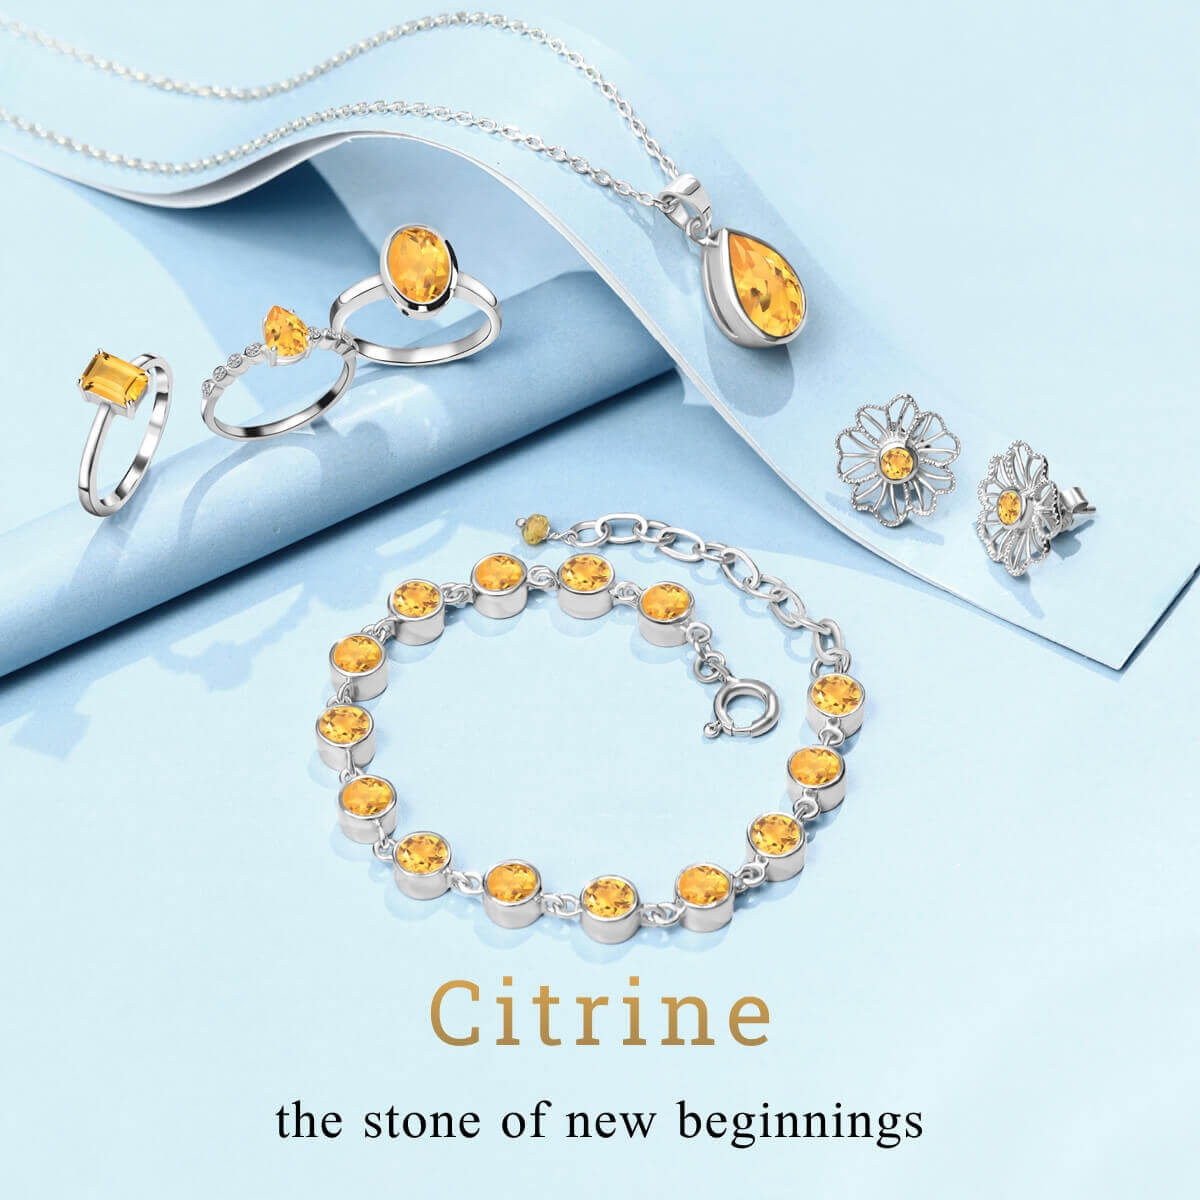 Citrine - the stone of new beginnings